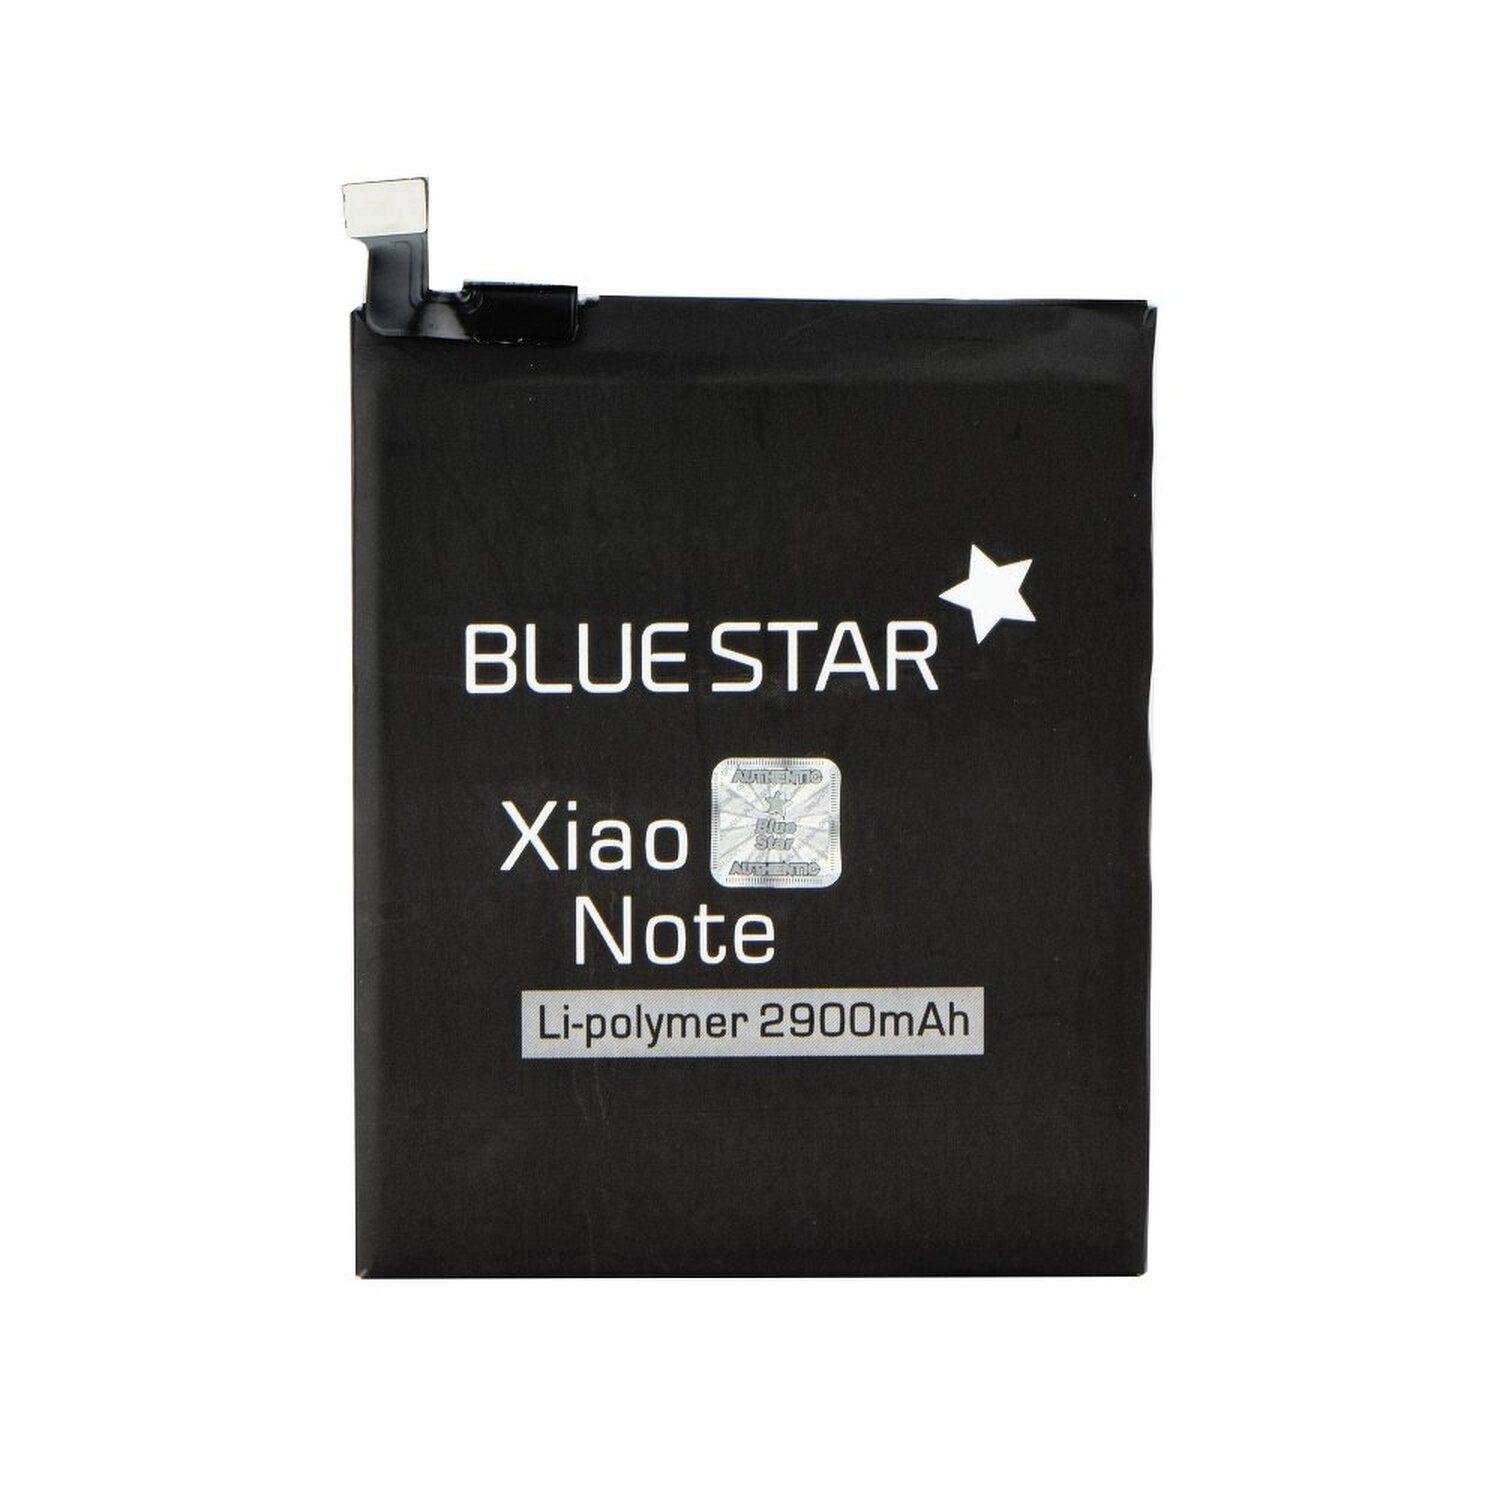 BLUESTAR Akku für Xiaomi Mi Handyakku Note Li-Ion